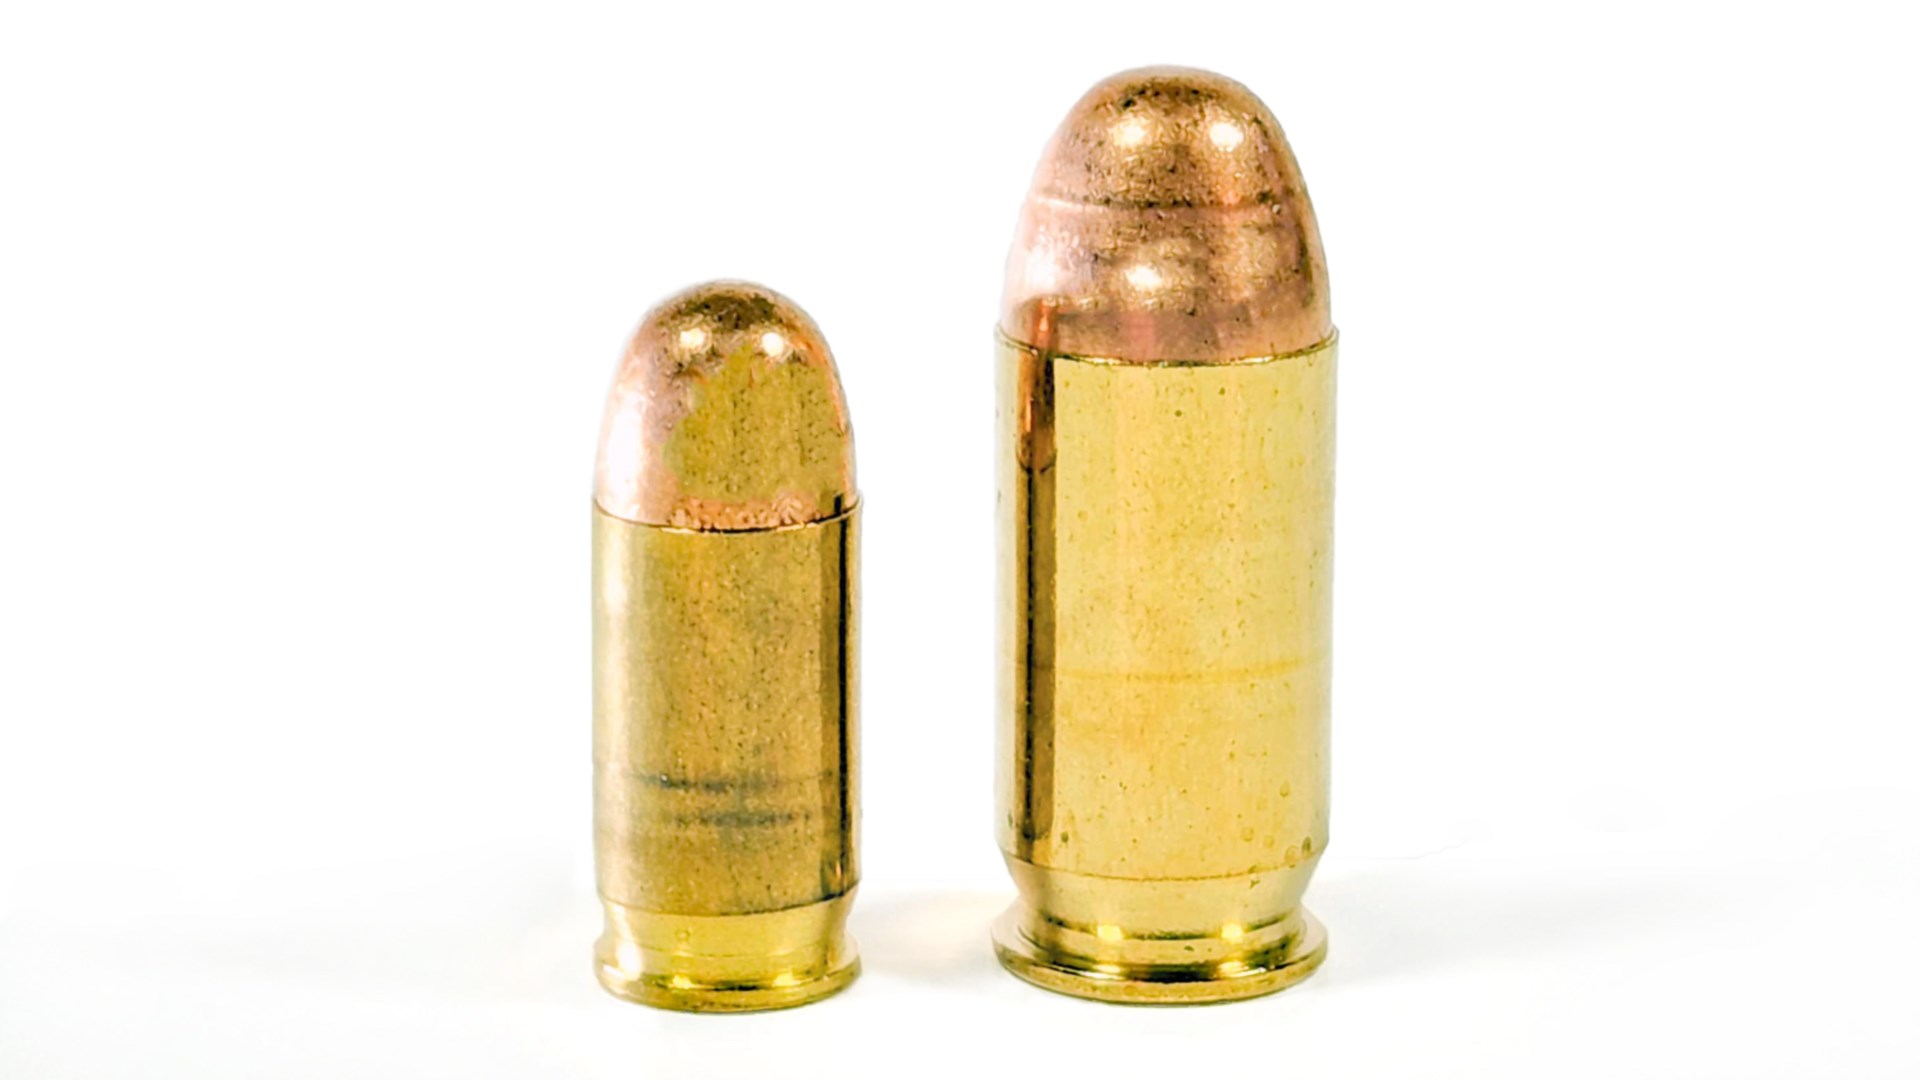 380 acp handgun cartridge bullet left and 45-cal .45 ACP cartridge shown on right brass bullets guns ammo